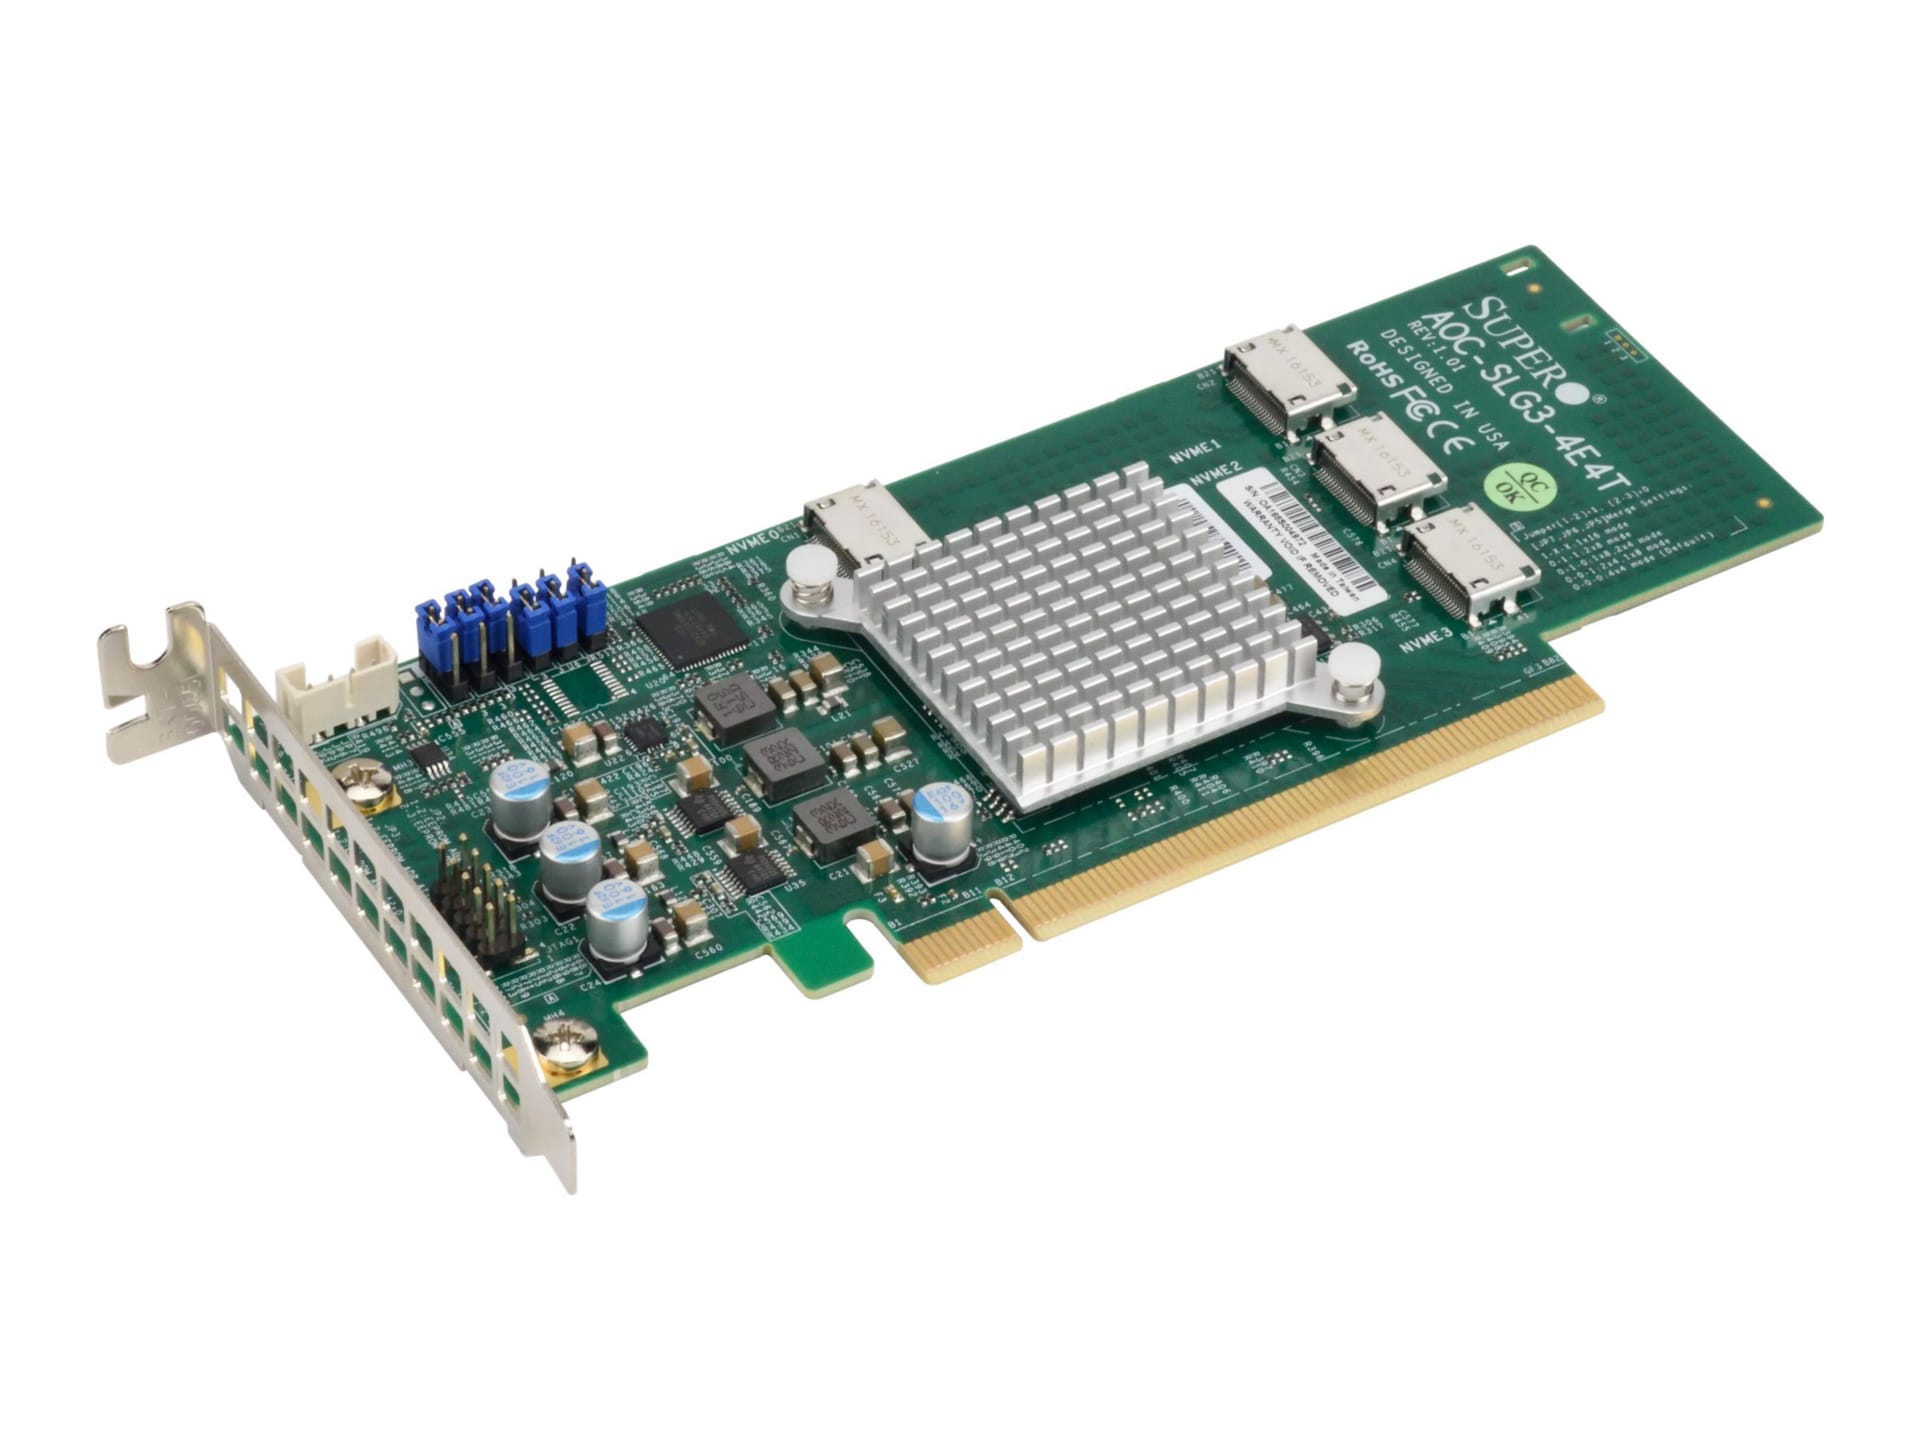 Supermicro AOC-SLG3-4E4T - storage controller - PCIe 3.0 - PCIe 3.0 x16